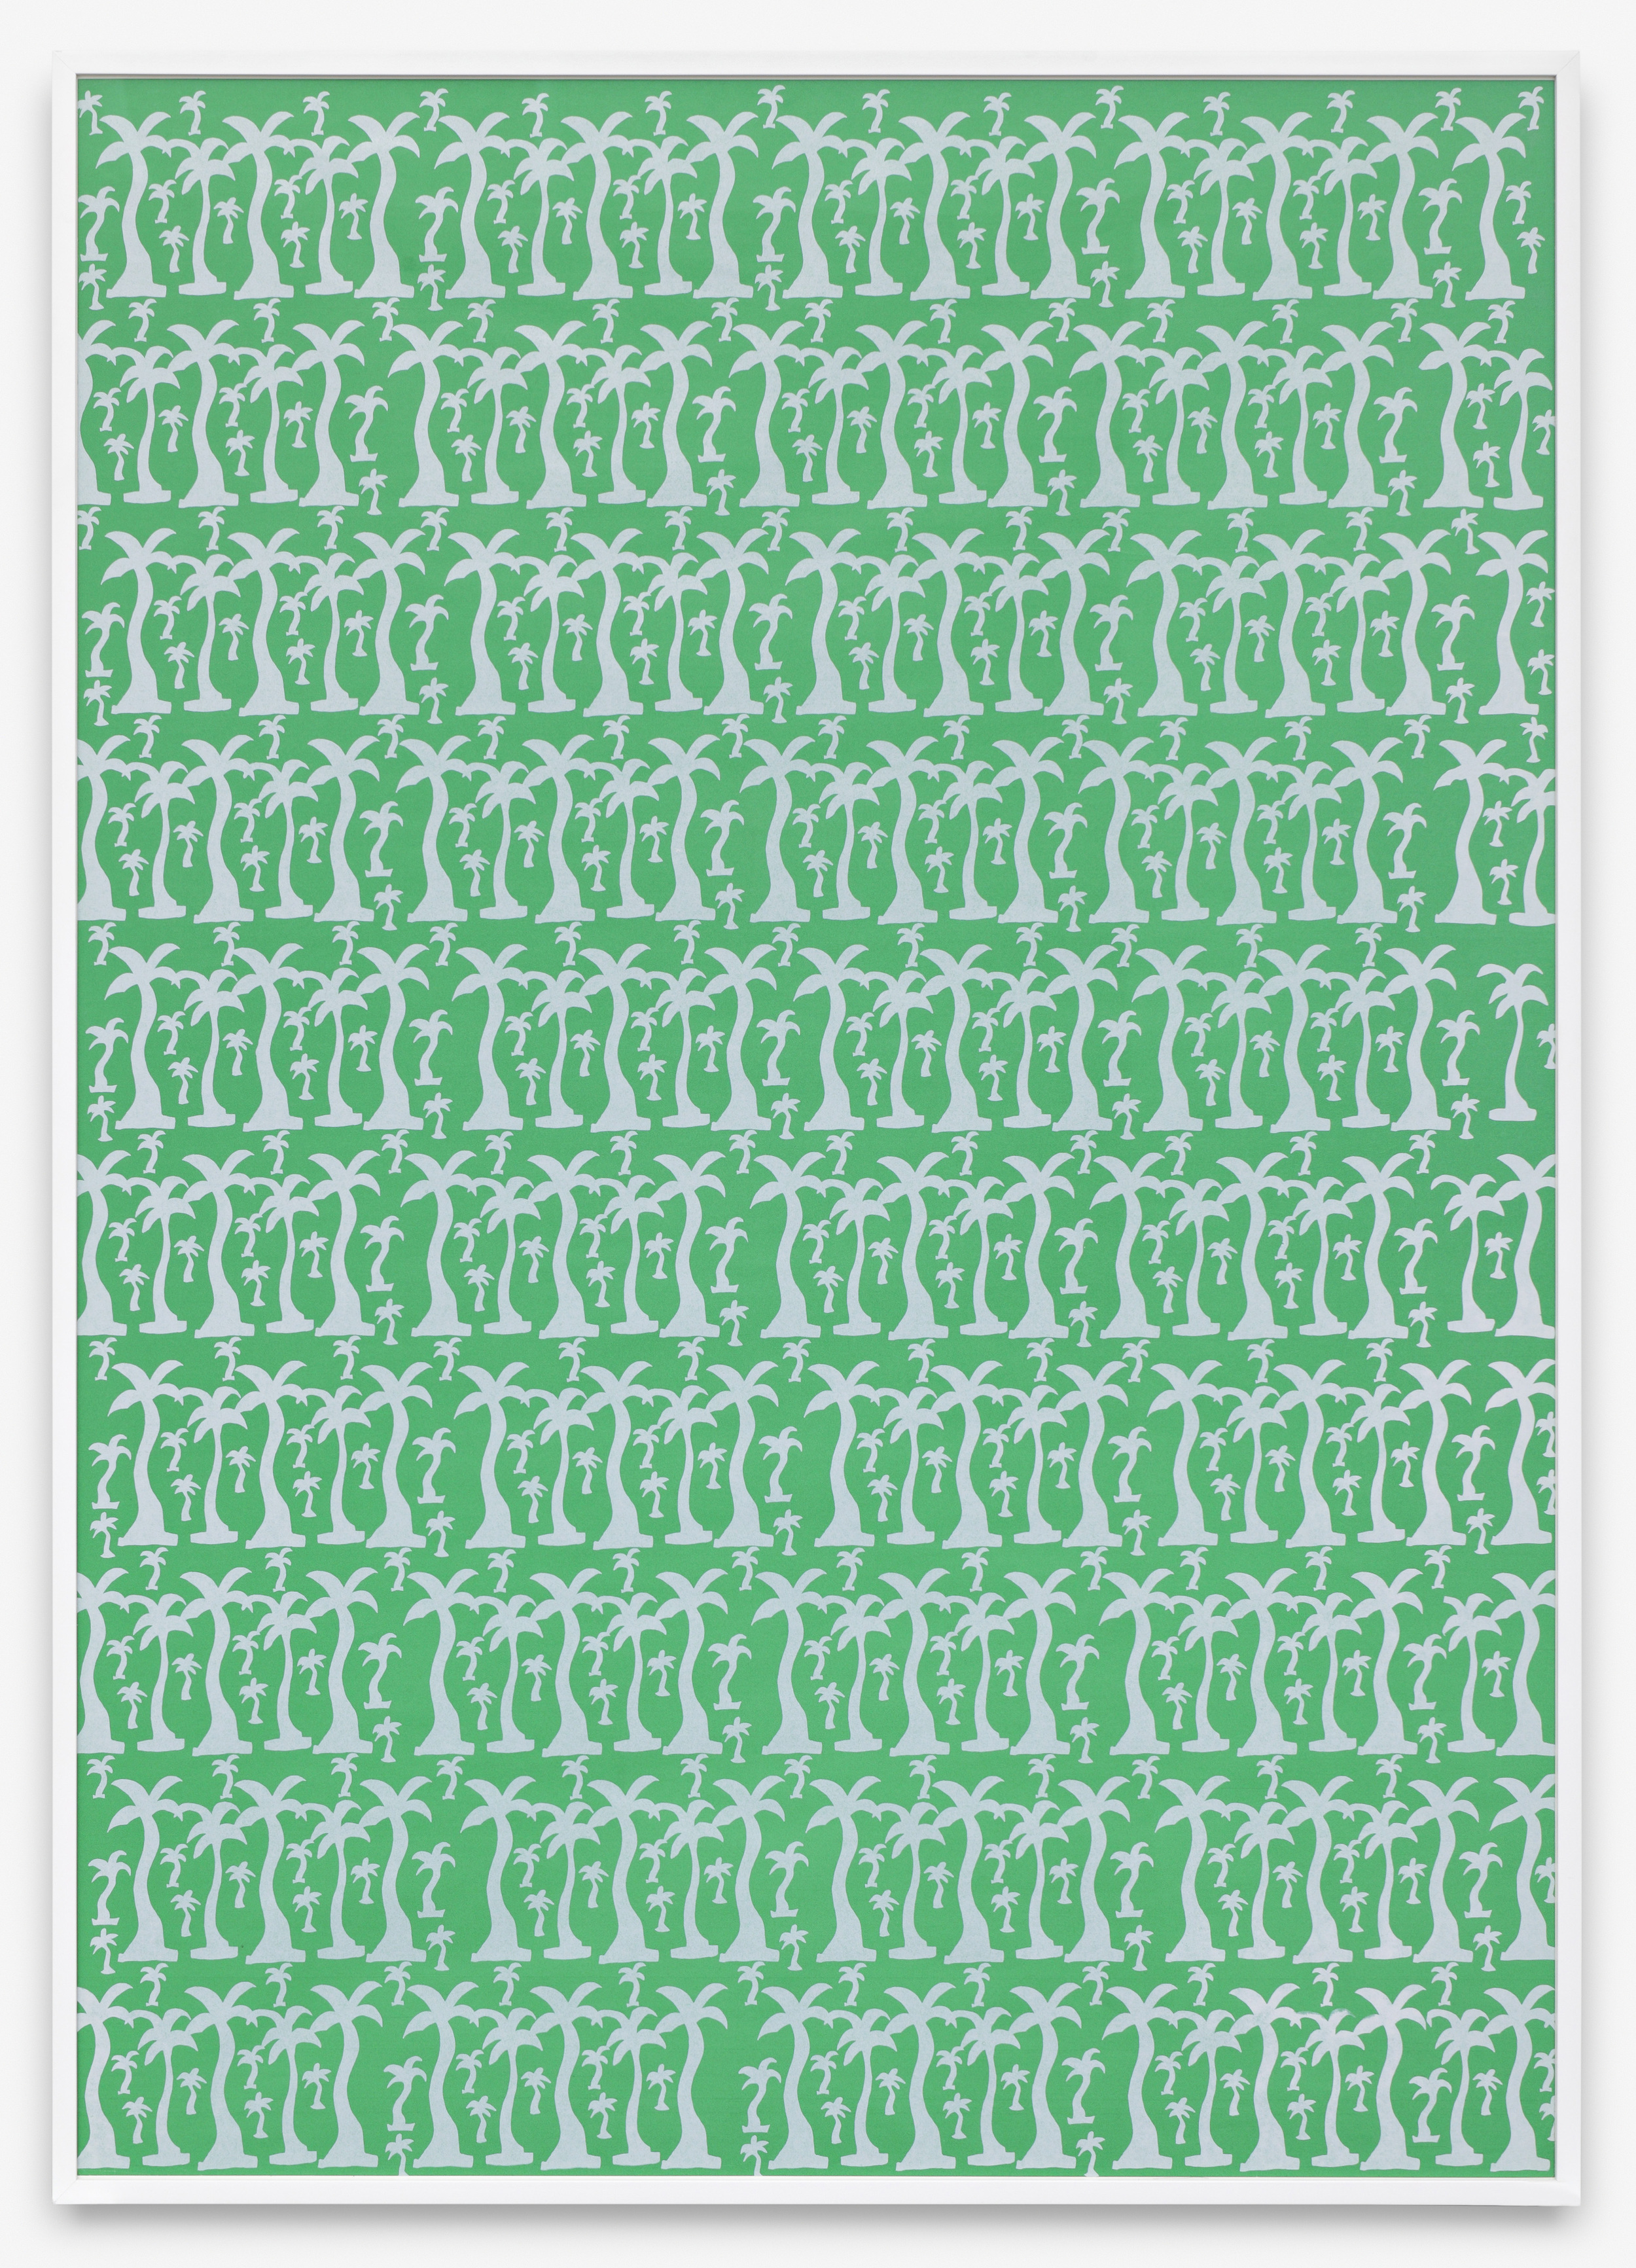  Friedrich Kuhn Untitled 1968/9 Screenprint 120 x 90 cm / 47.2 x 35.4 in, framed 